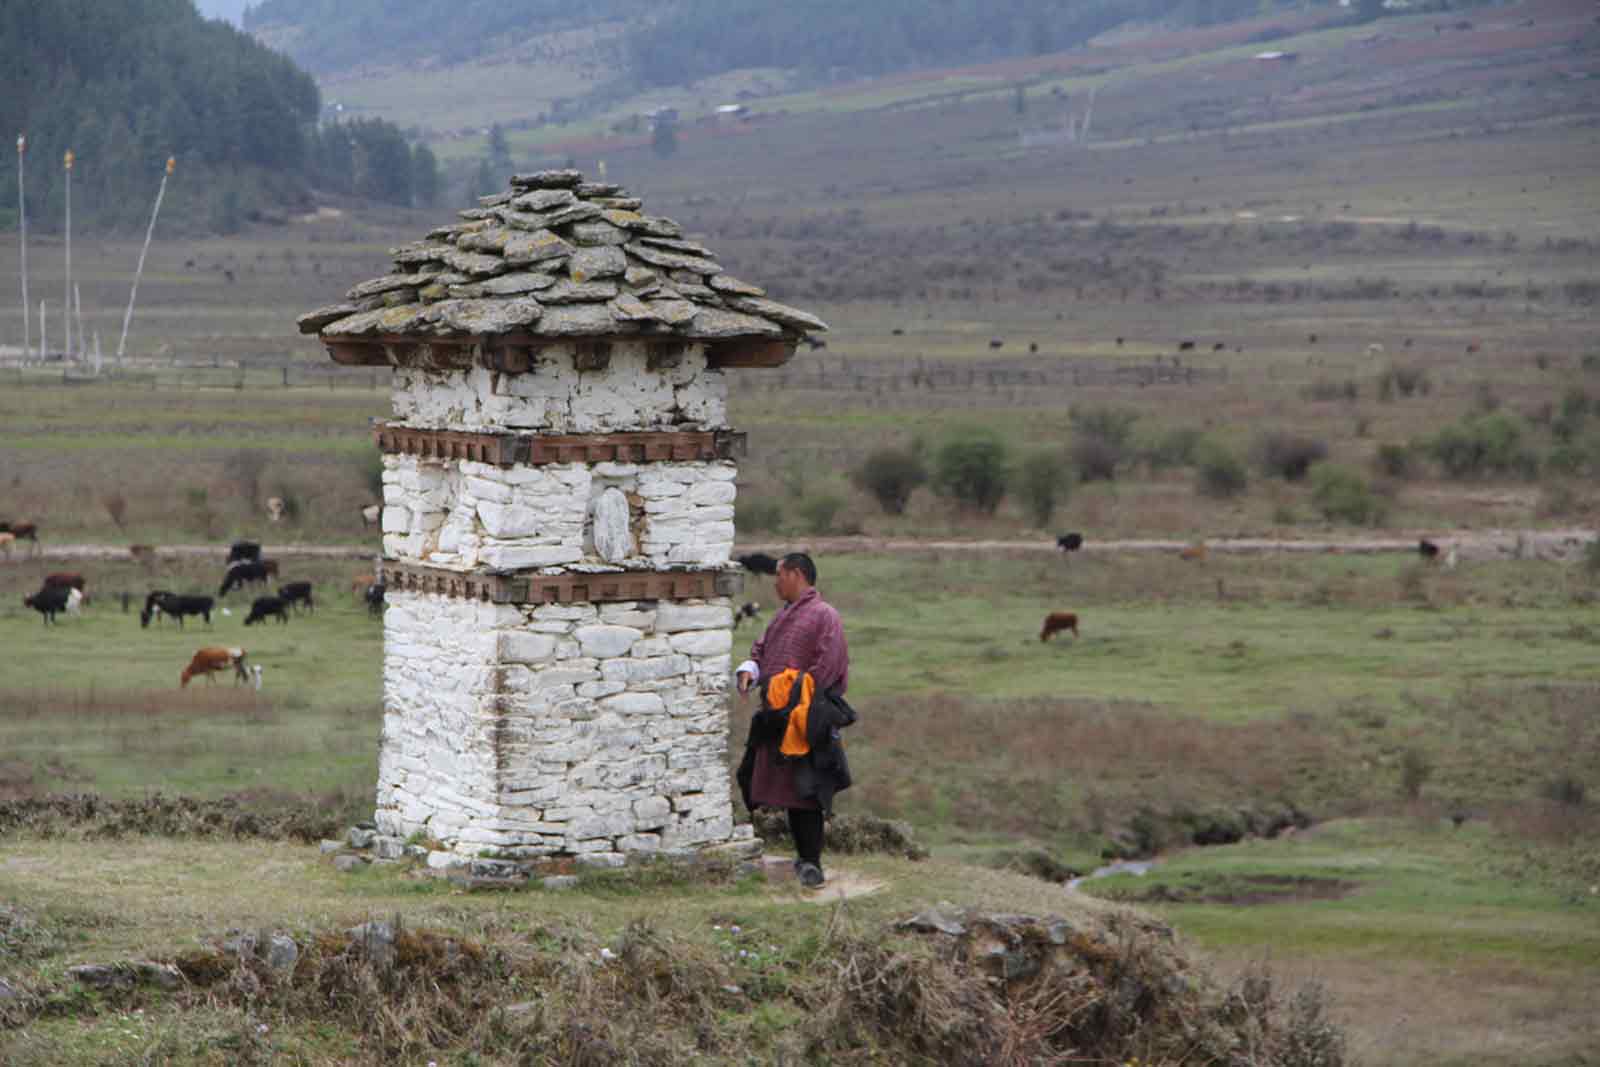 BHUTAN: A MONK AND A CARPENTER